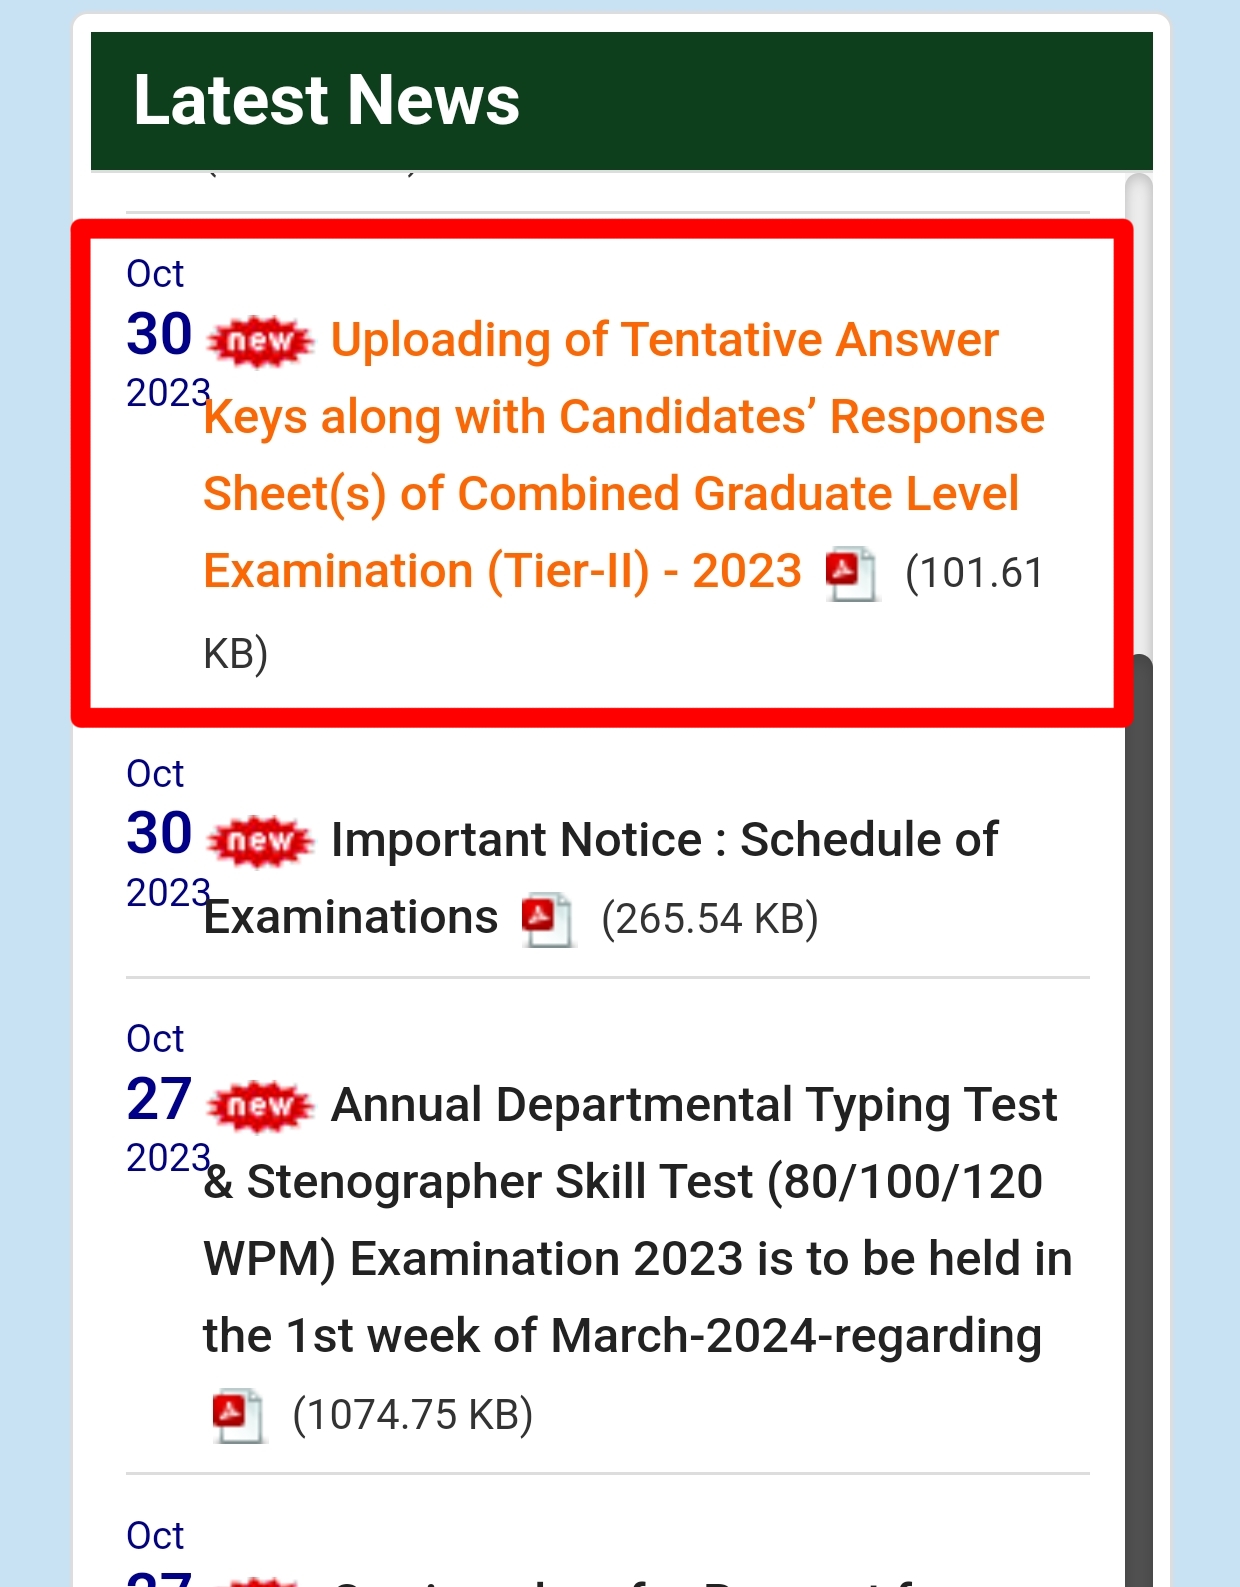 Uploading of Tentative Answer Keys along with Candidates’ Response Sheet(s) of Combined Graduate Level Examination (Tier-II) - 2023